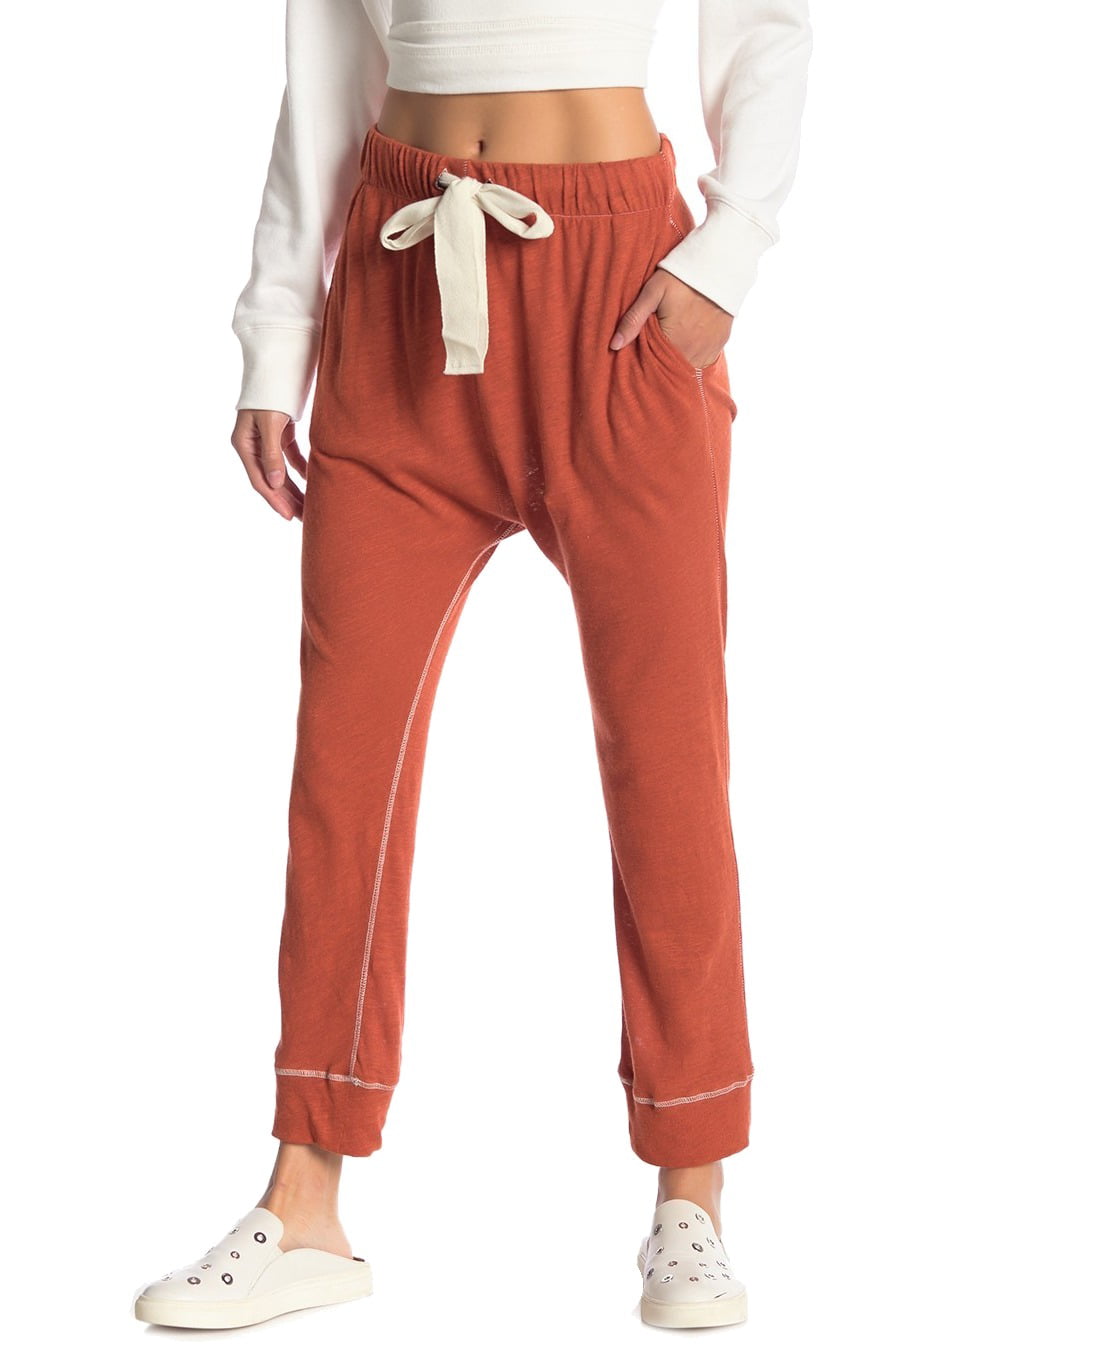 Free People Pants - Women's Medium Drawstring Pants Stretch M - Walmart ...